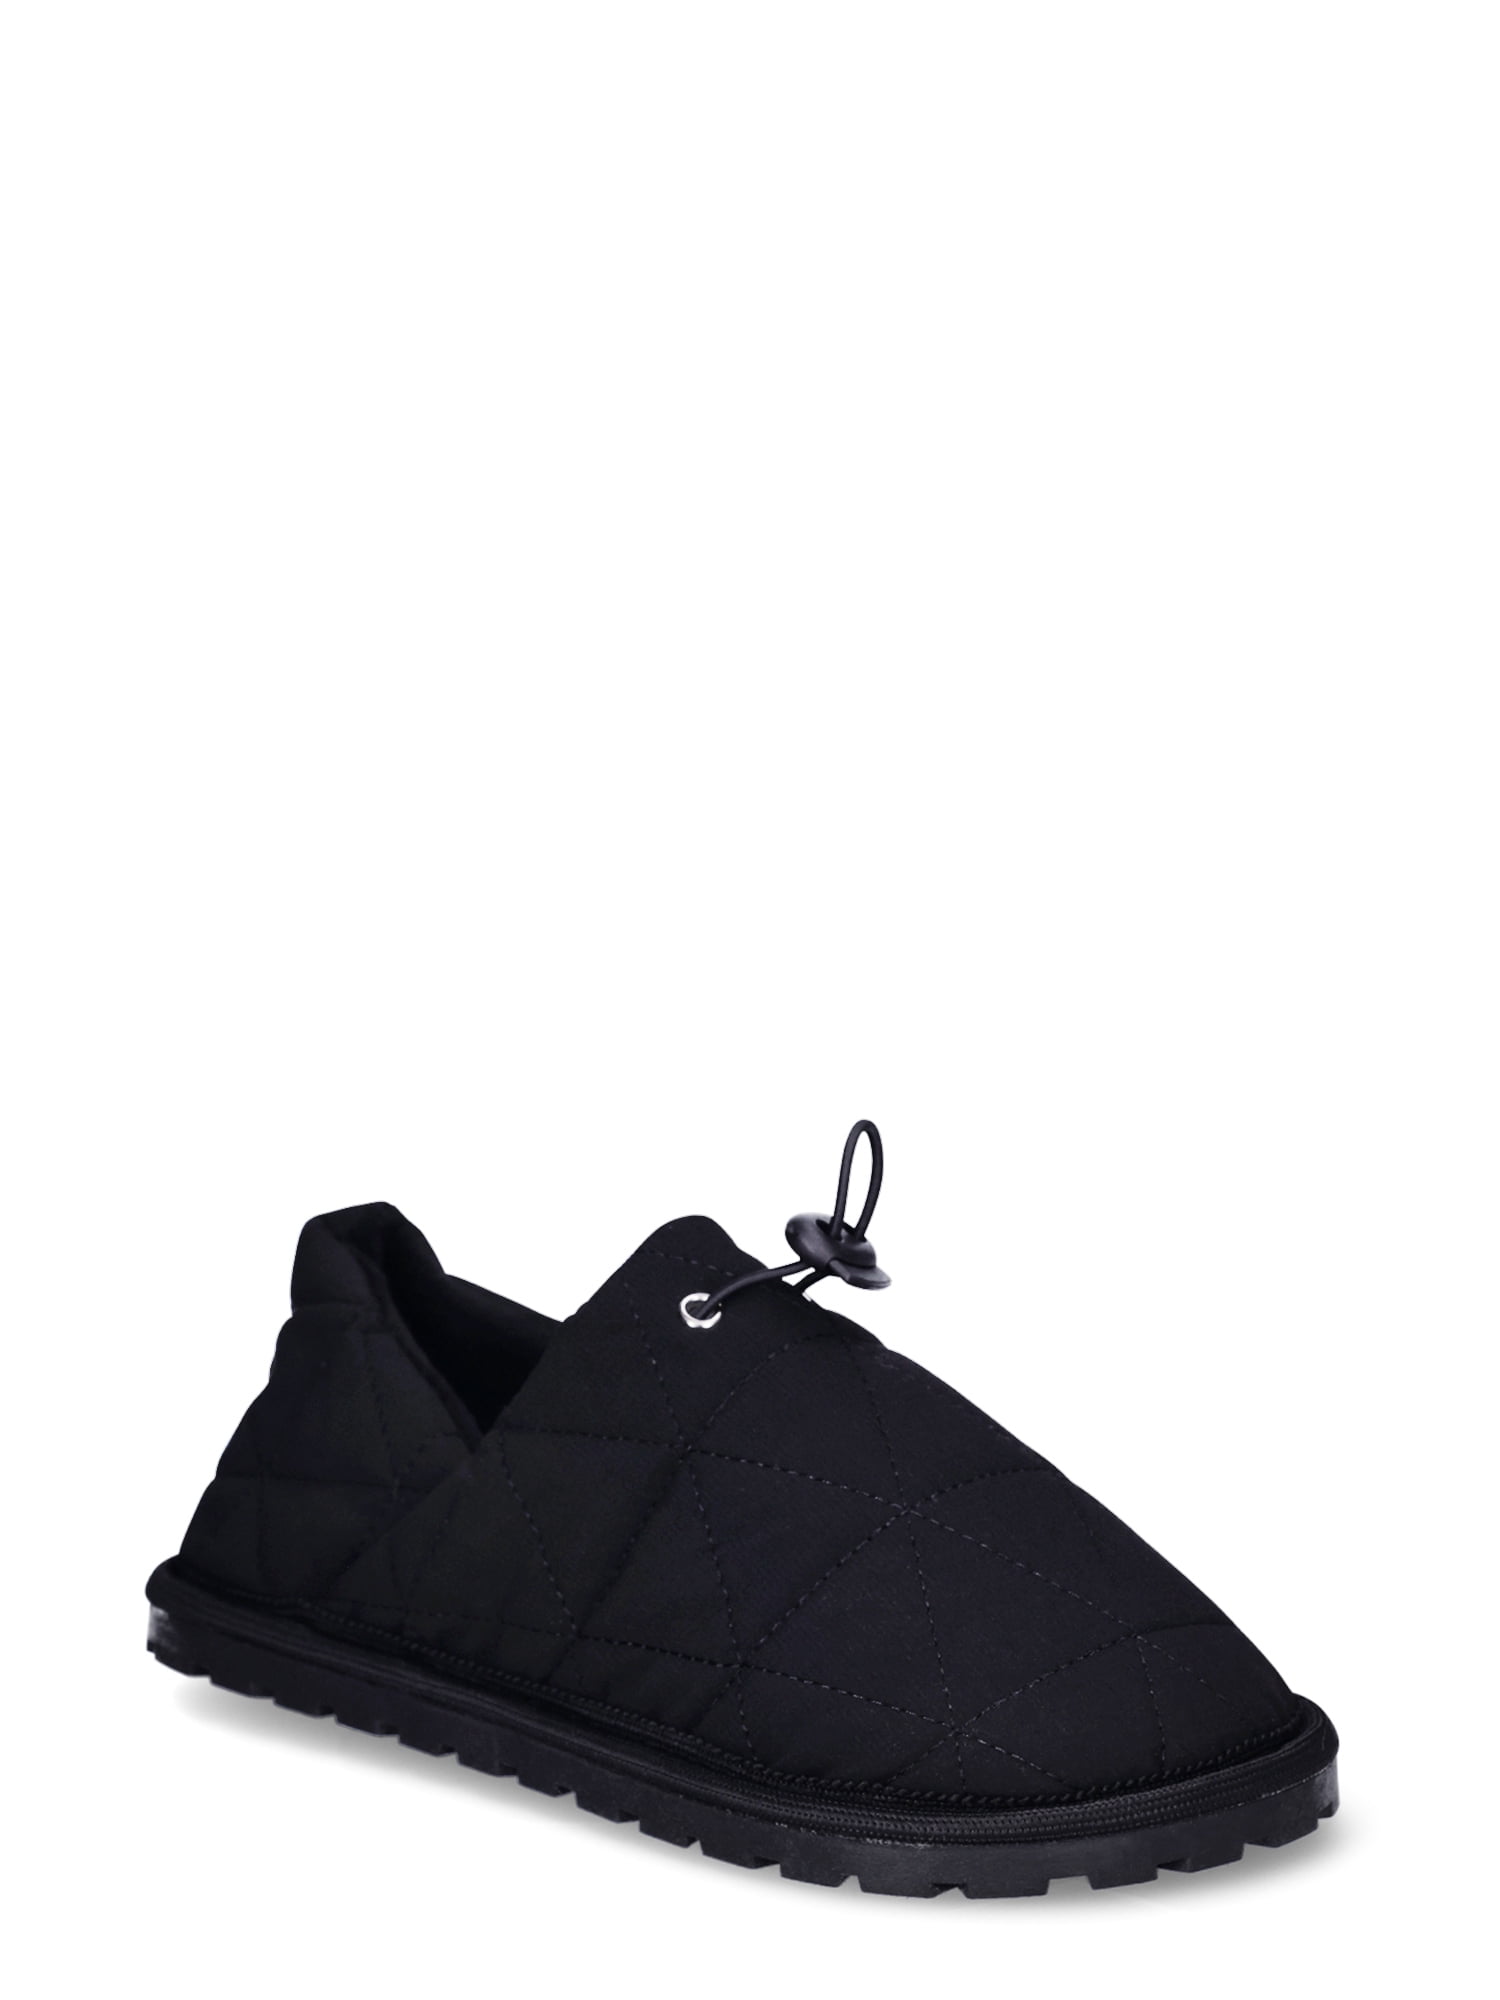 Amazon.com | FamilyFairy Men's Memory Foam House Slippers Warm Slip-On  Bedroom Shoes Black, Size 7-8 | Slippers